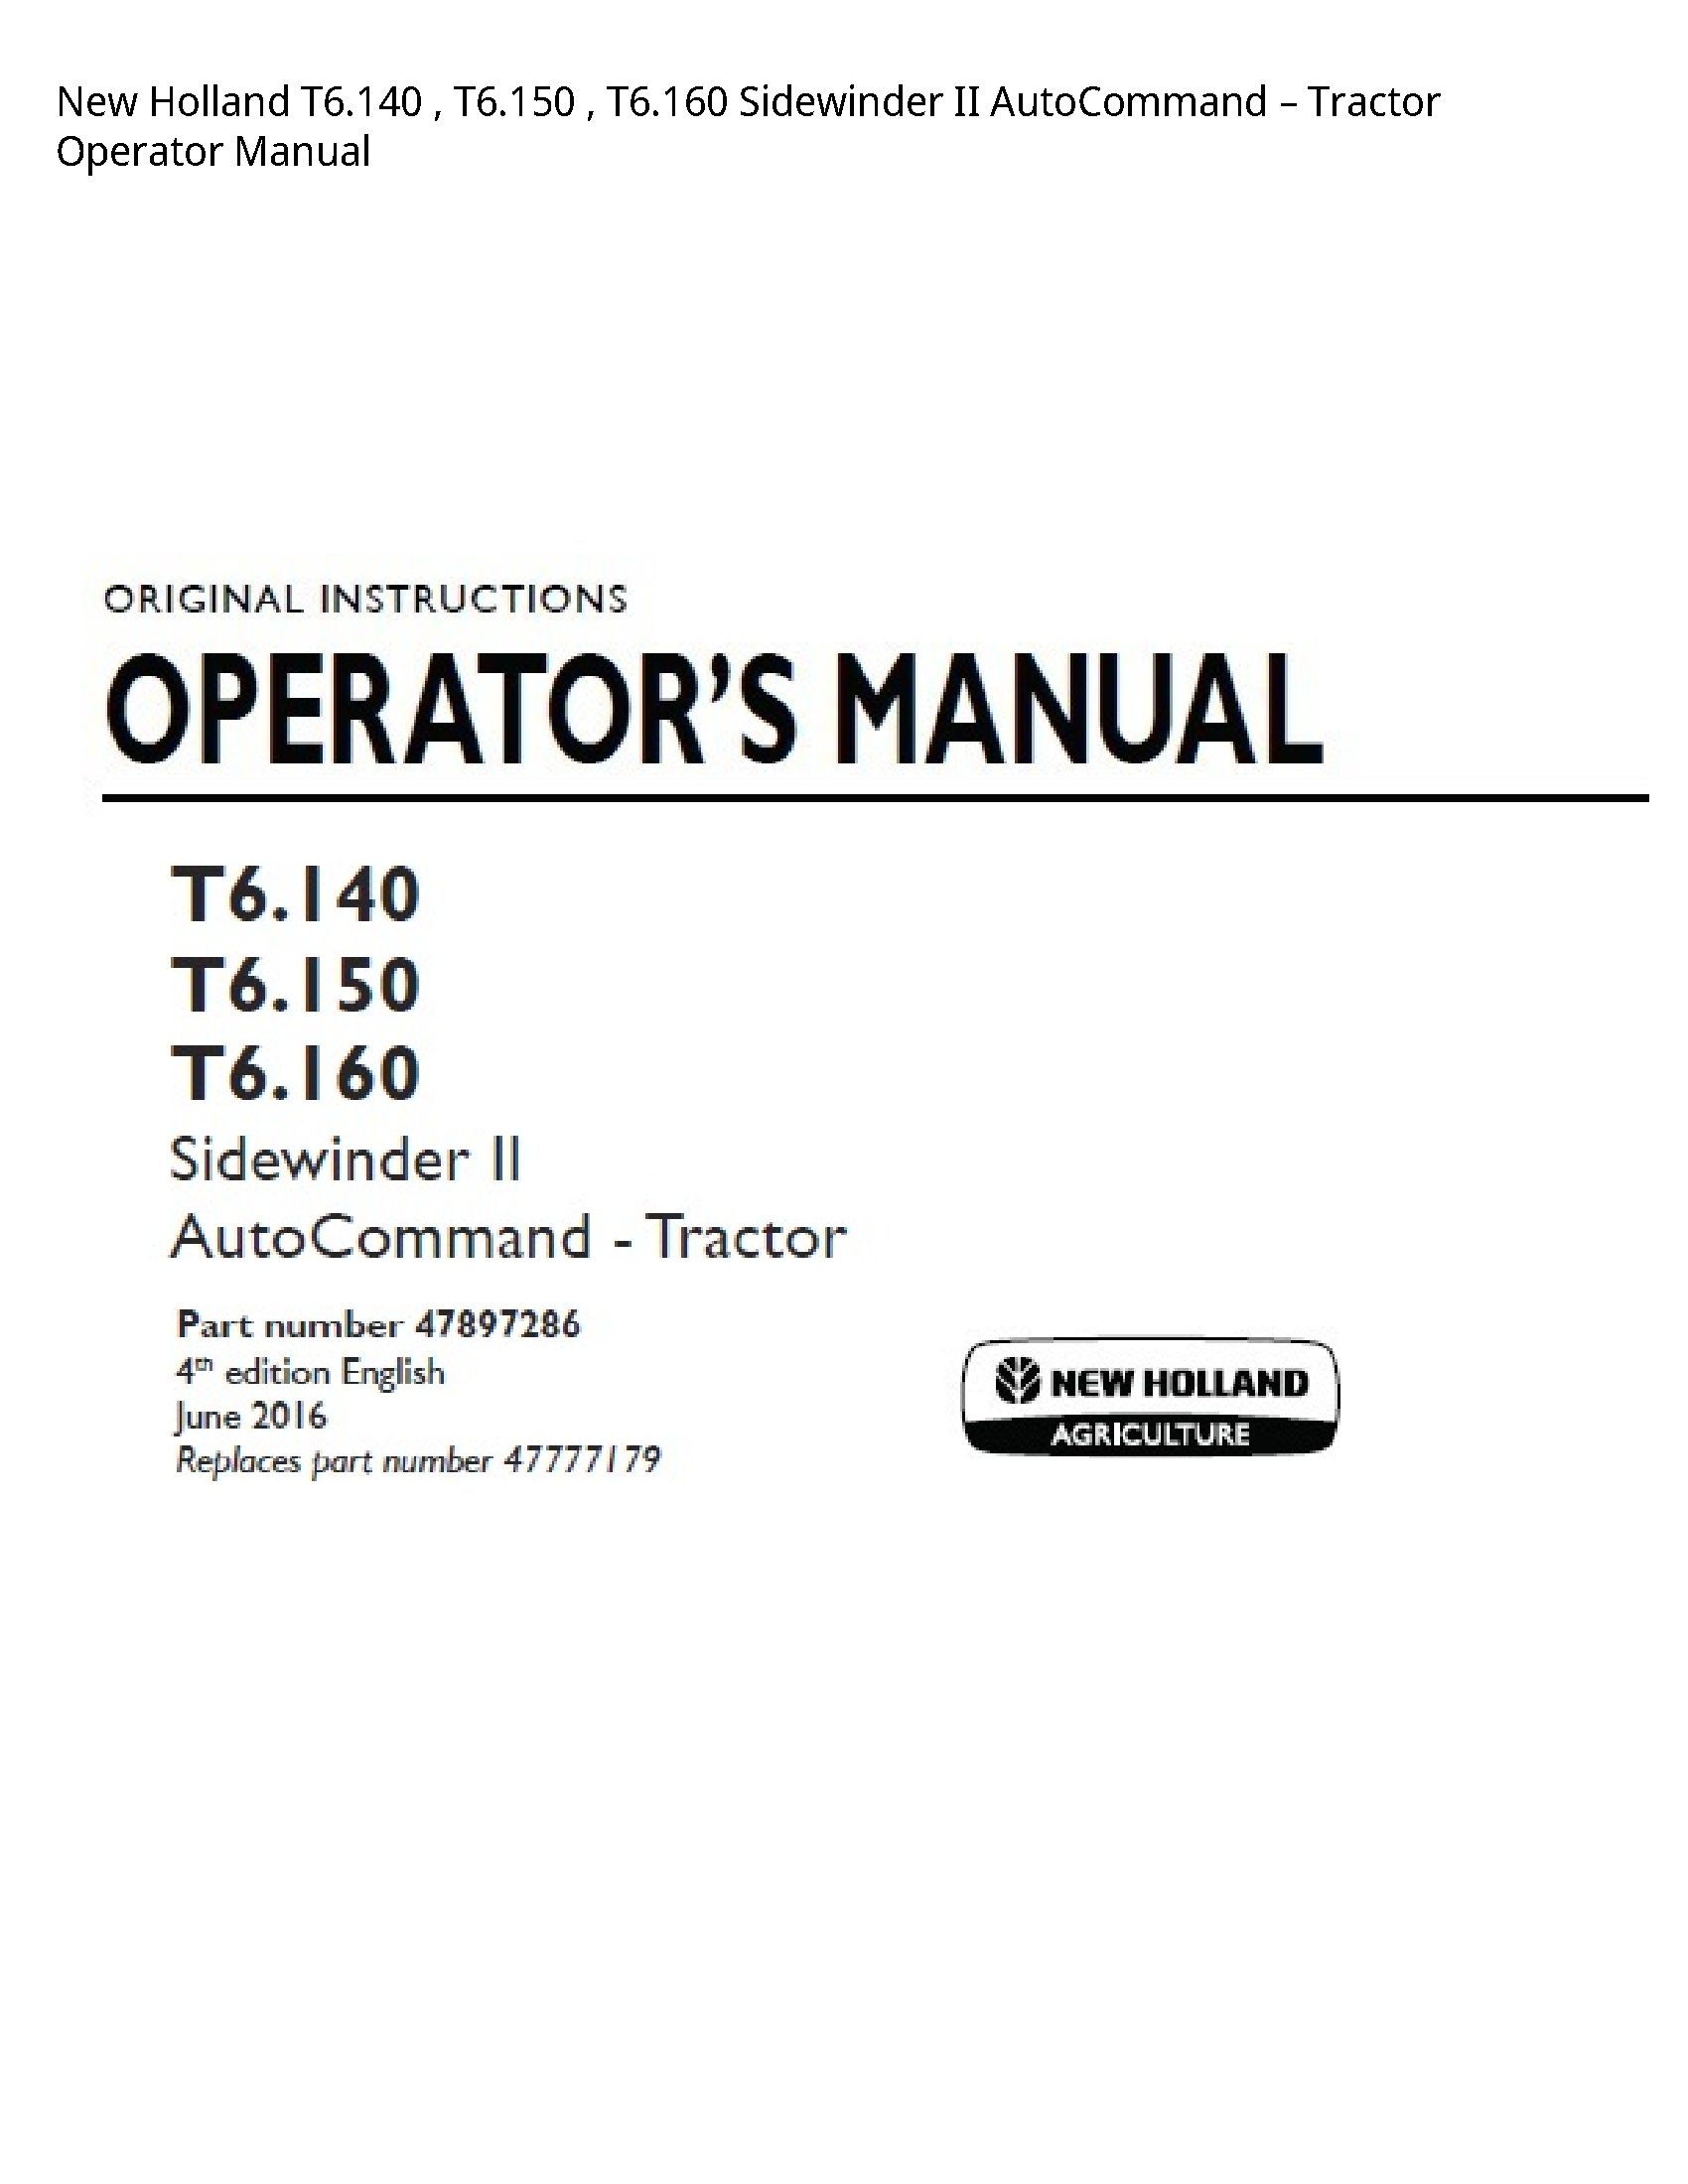 New Holland T6.140 Sidewinder II AutoCommand Tractor Operator manual